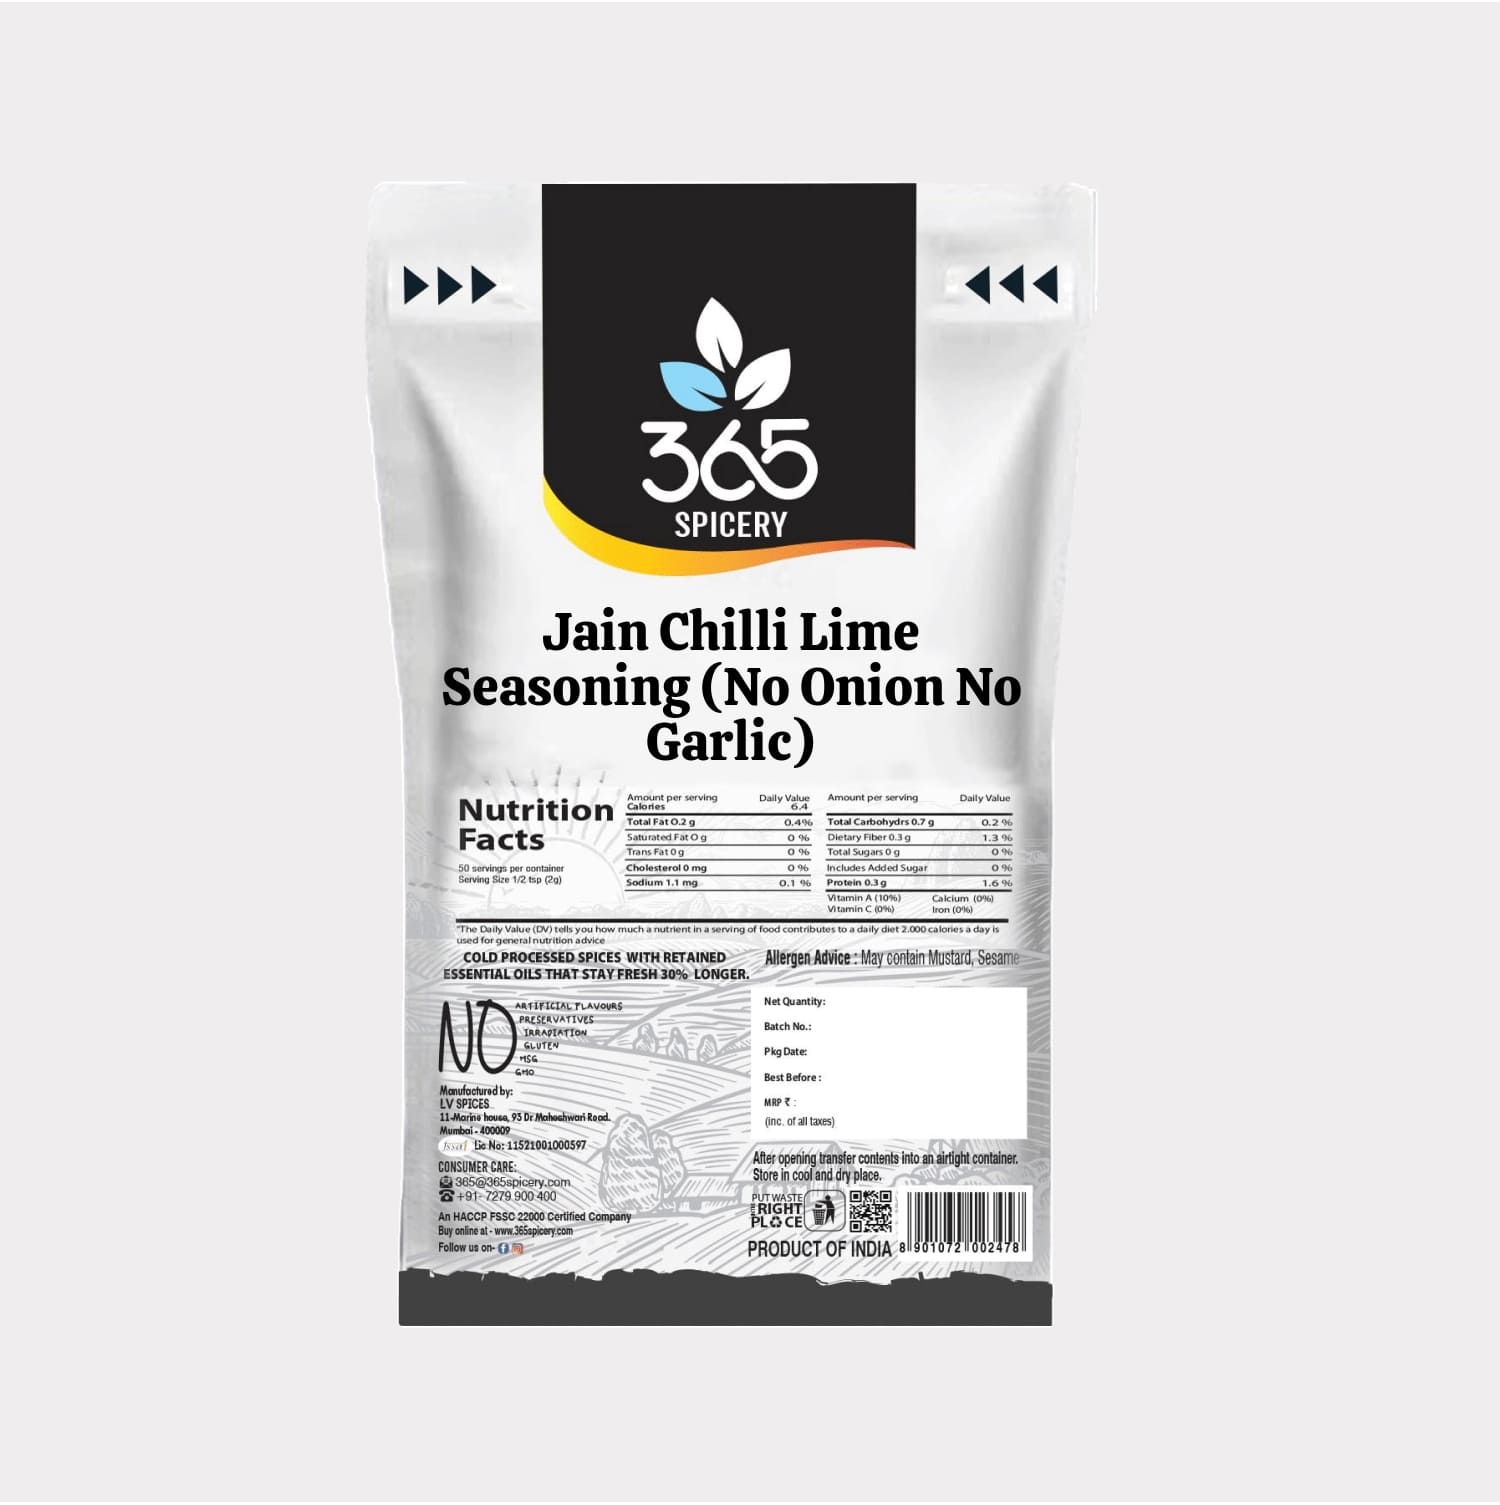 Jain Chilli Lime Seasoning (No Onion No Garlic)